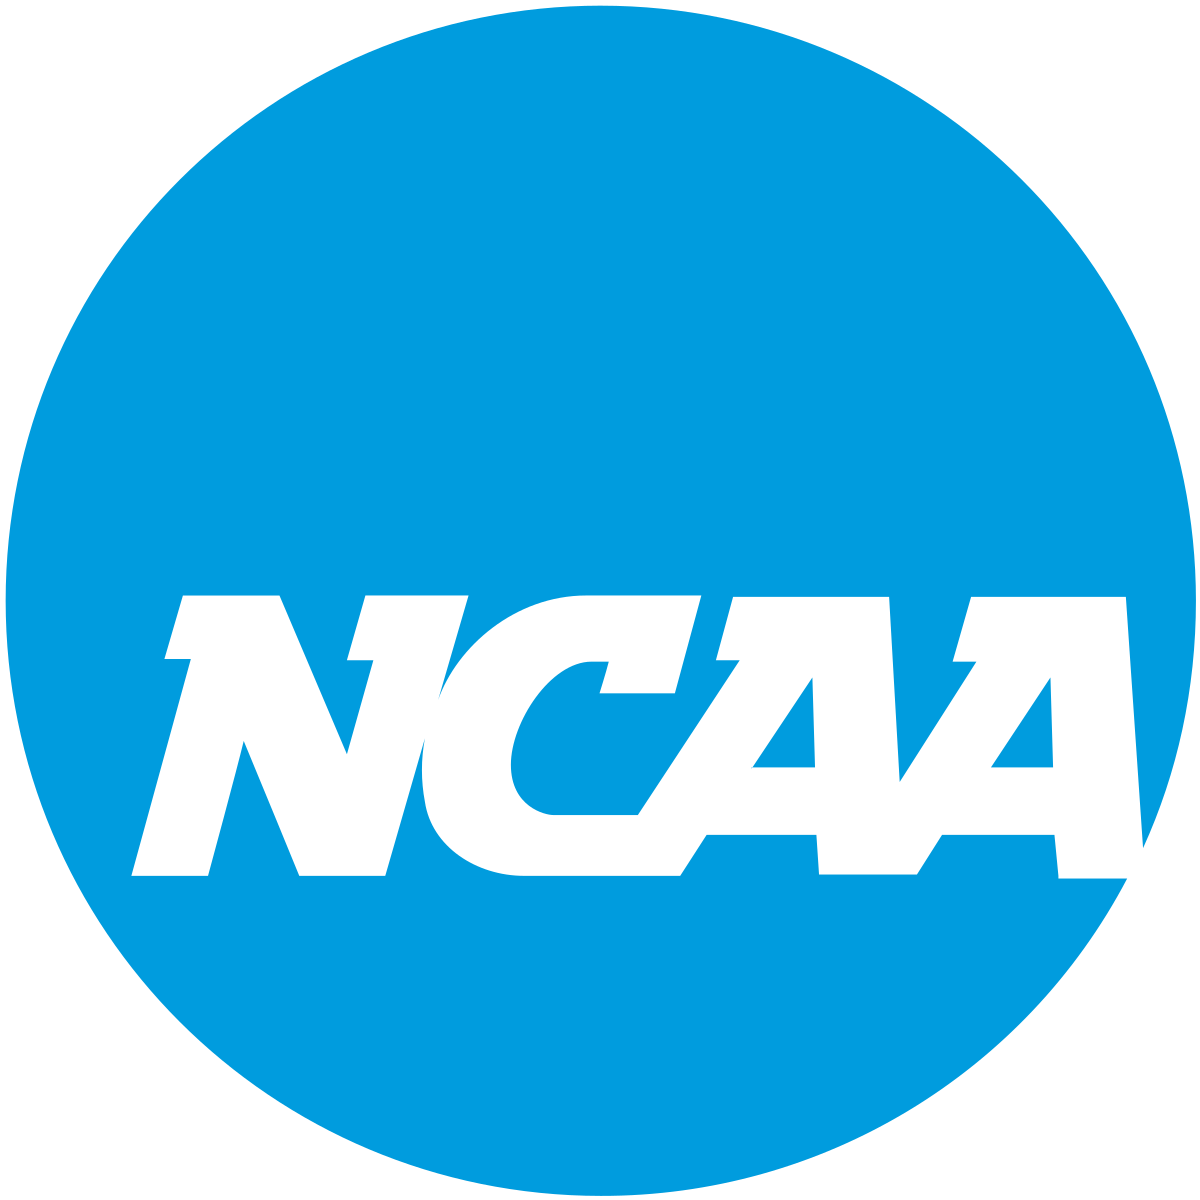 National Collegiate Athletic Association - Wikipedia